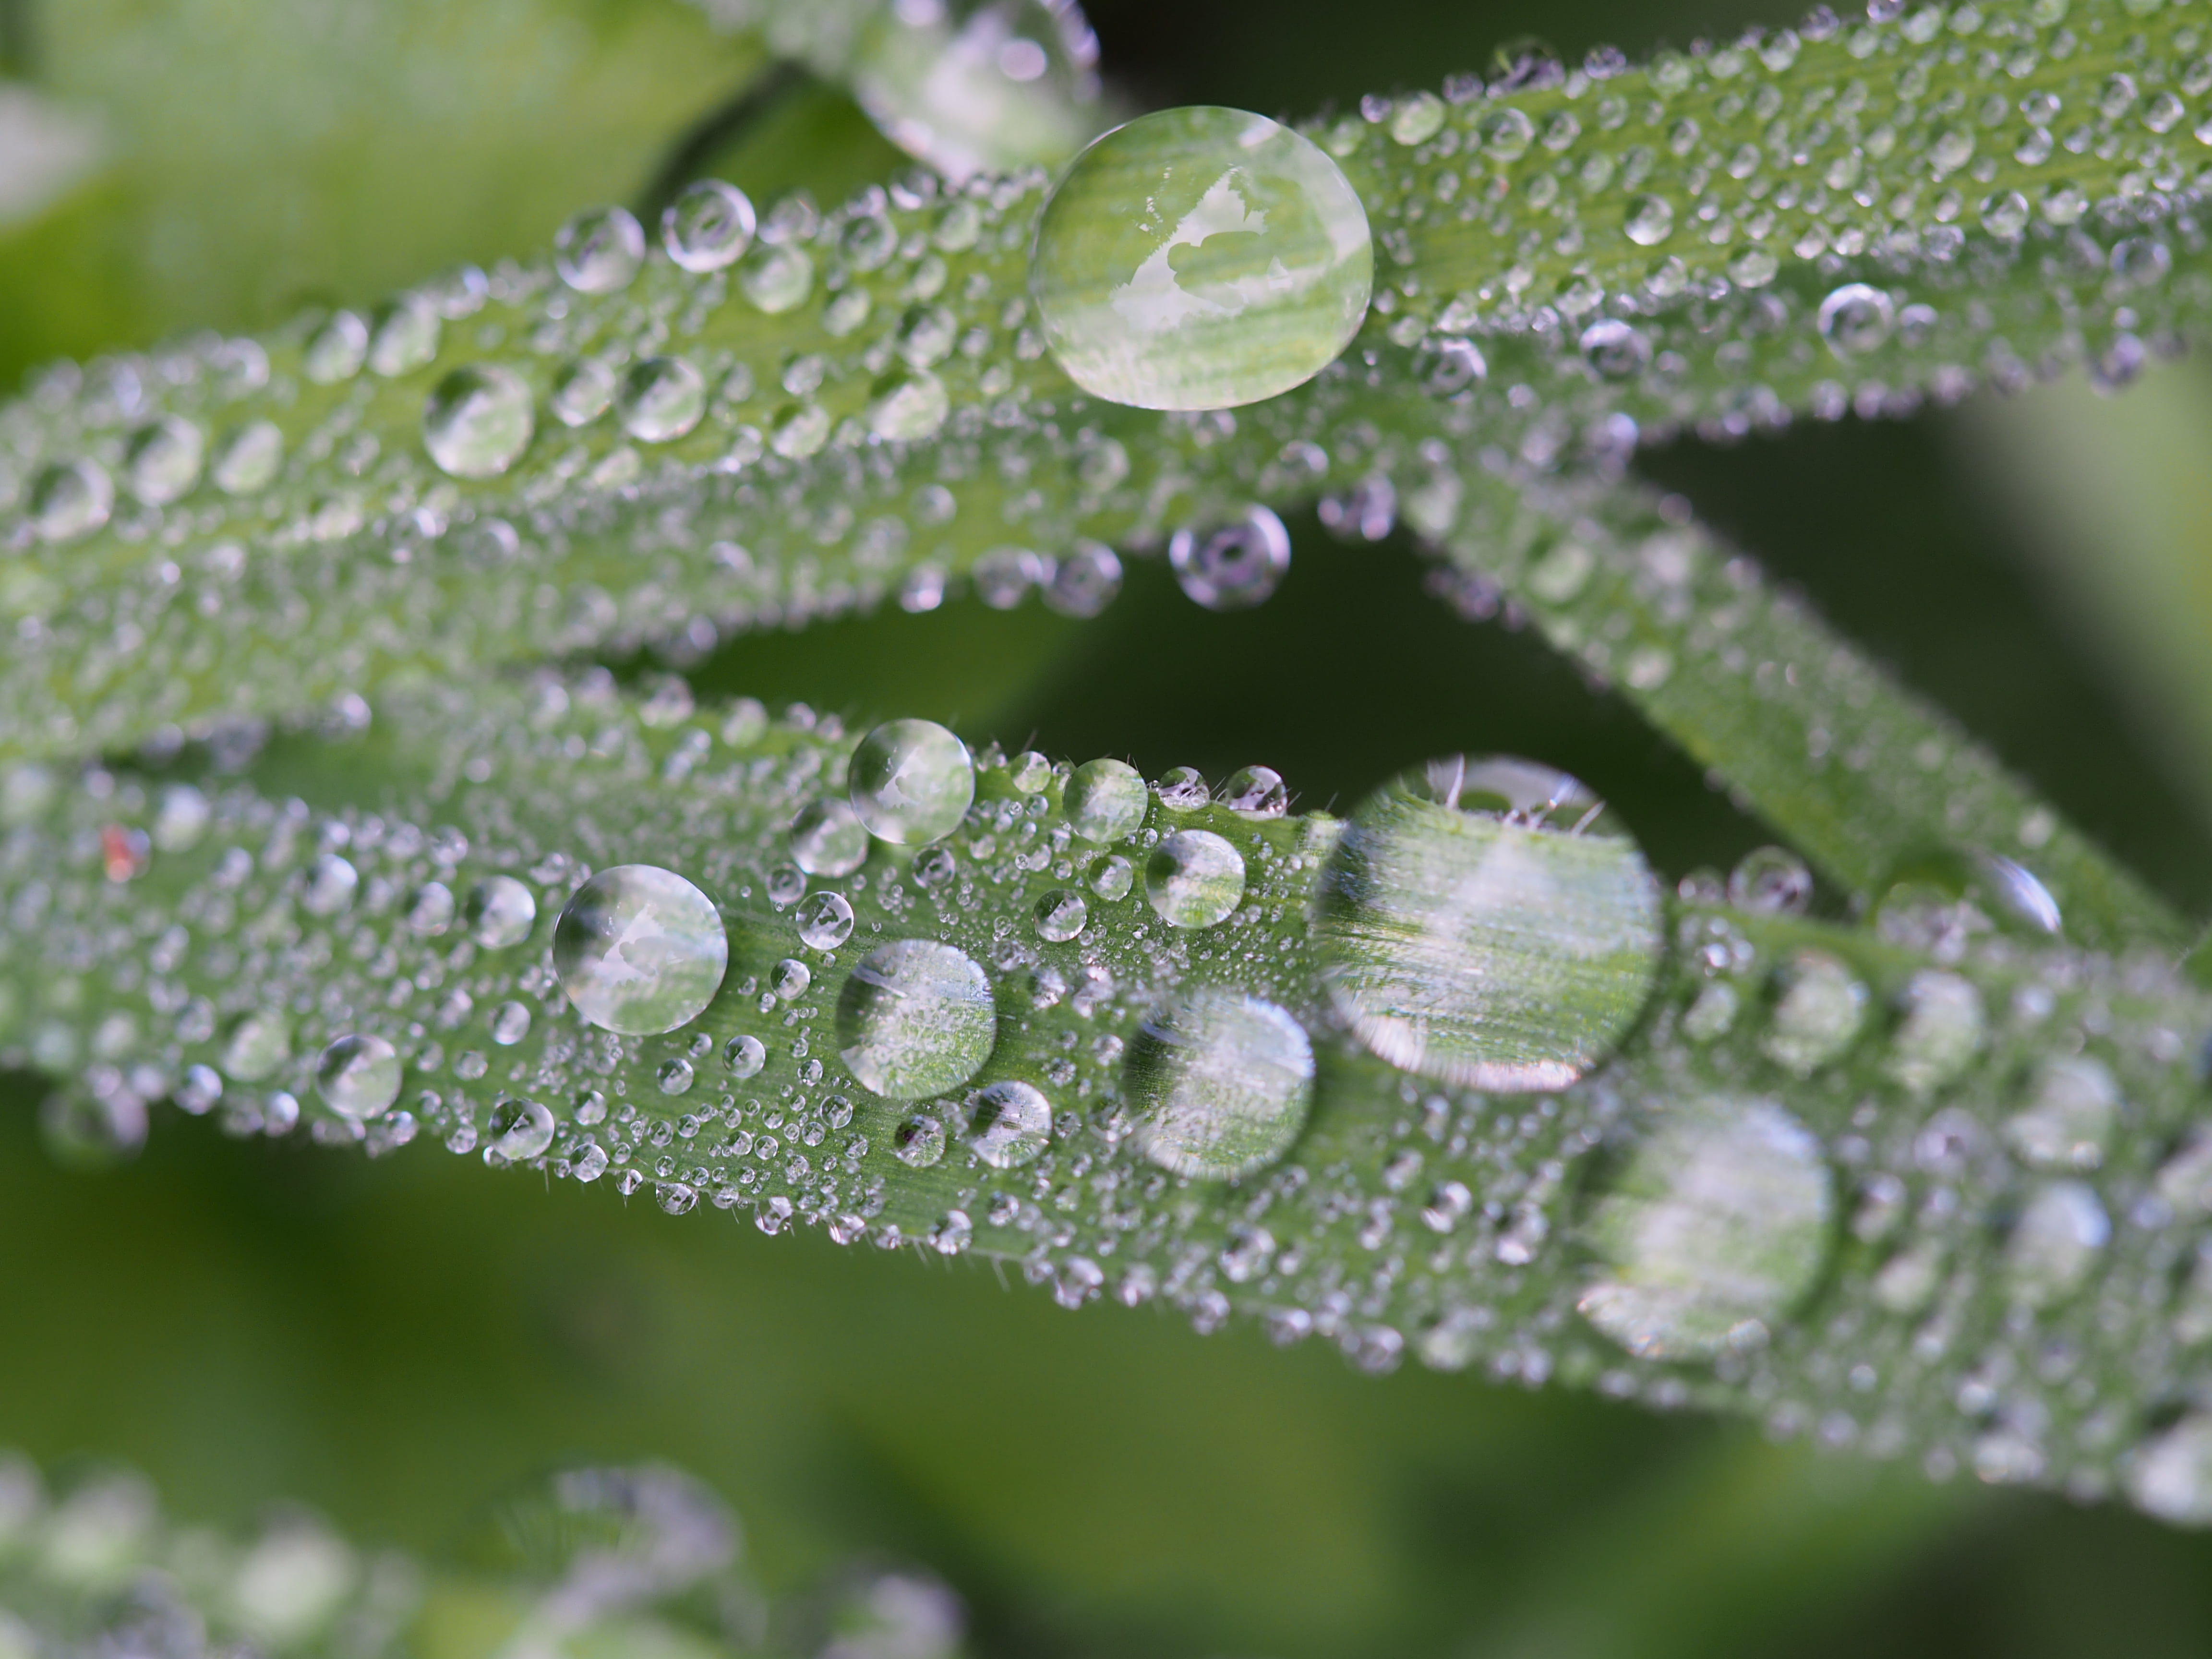 macro shot photography of dew drops on leaf